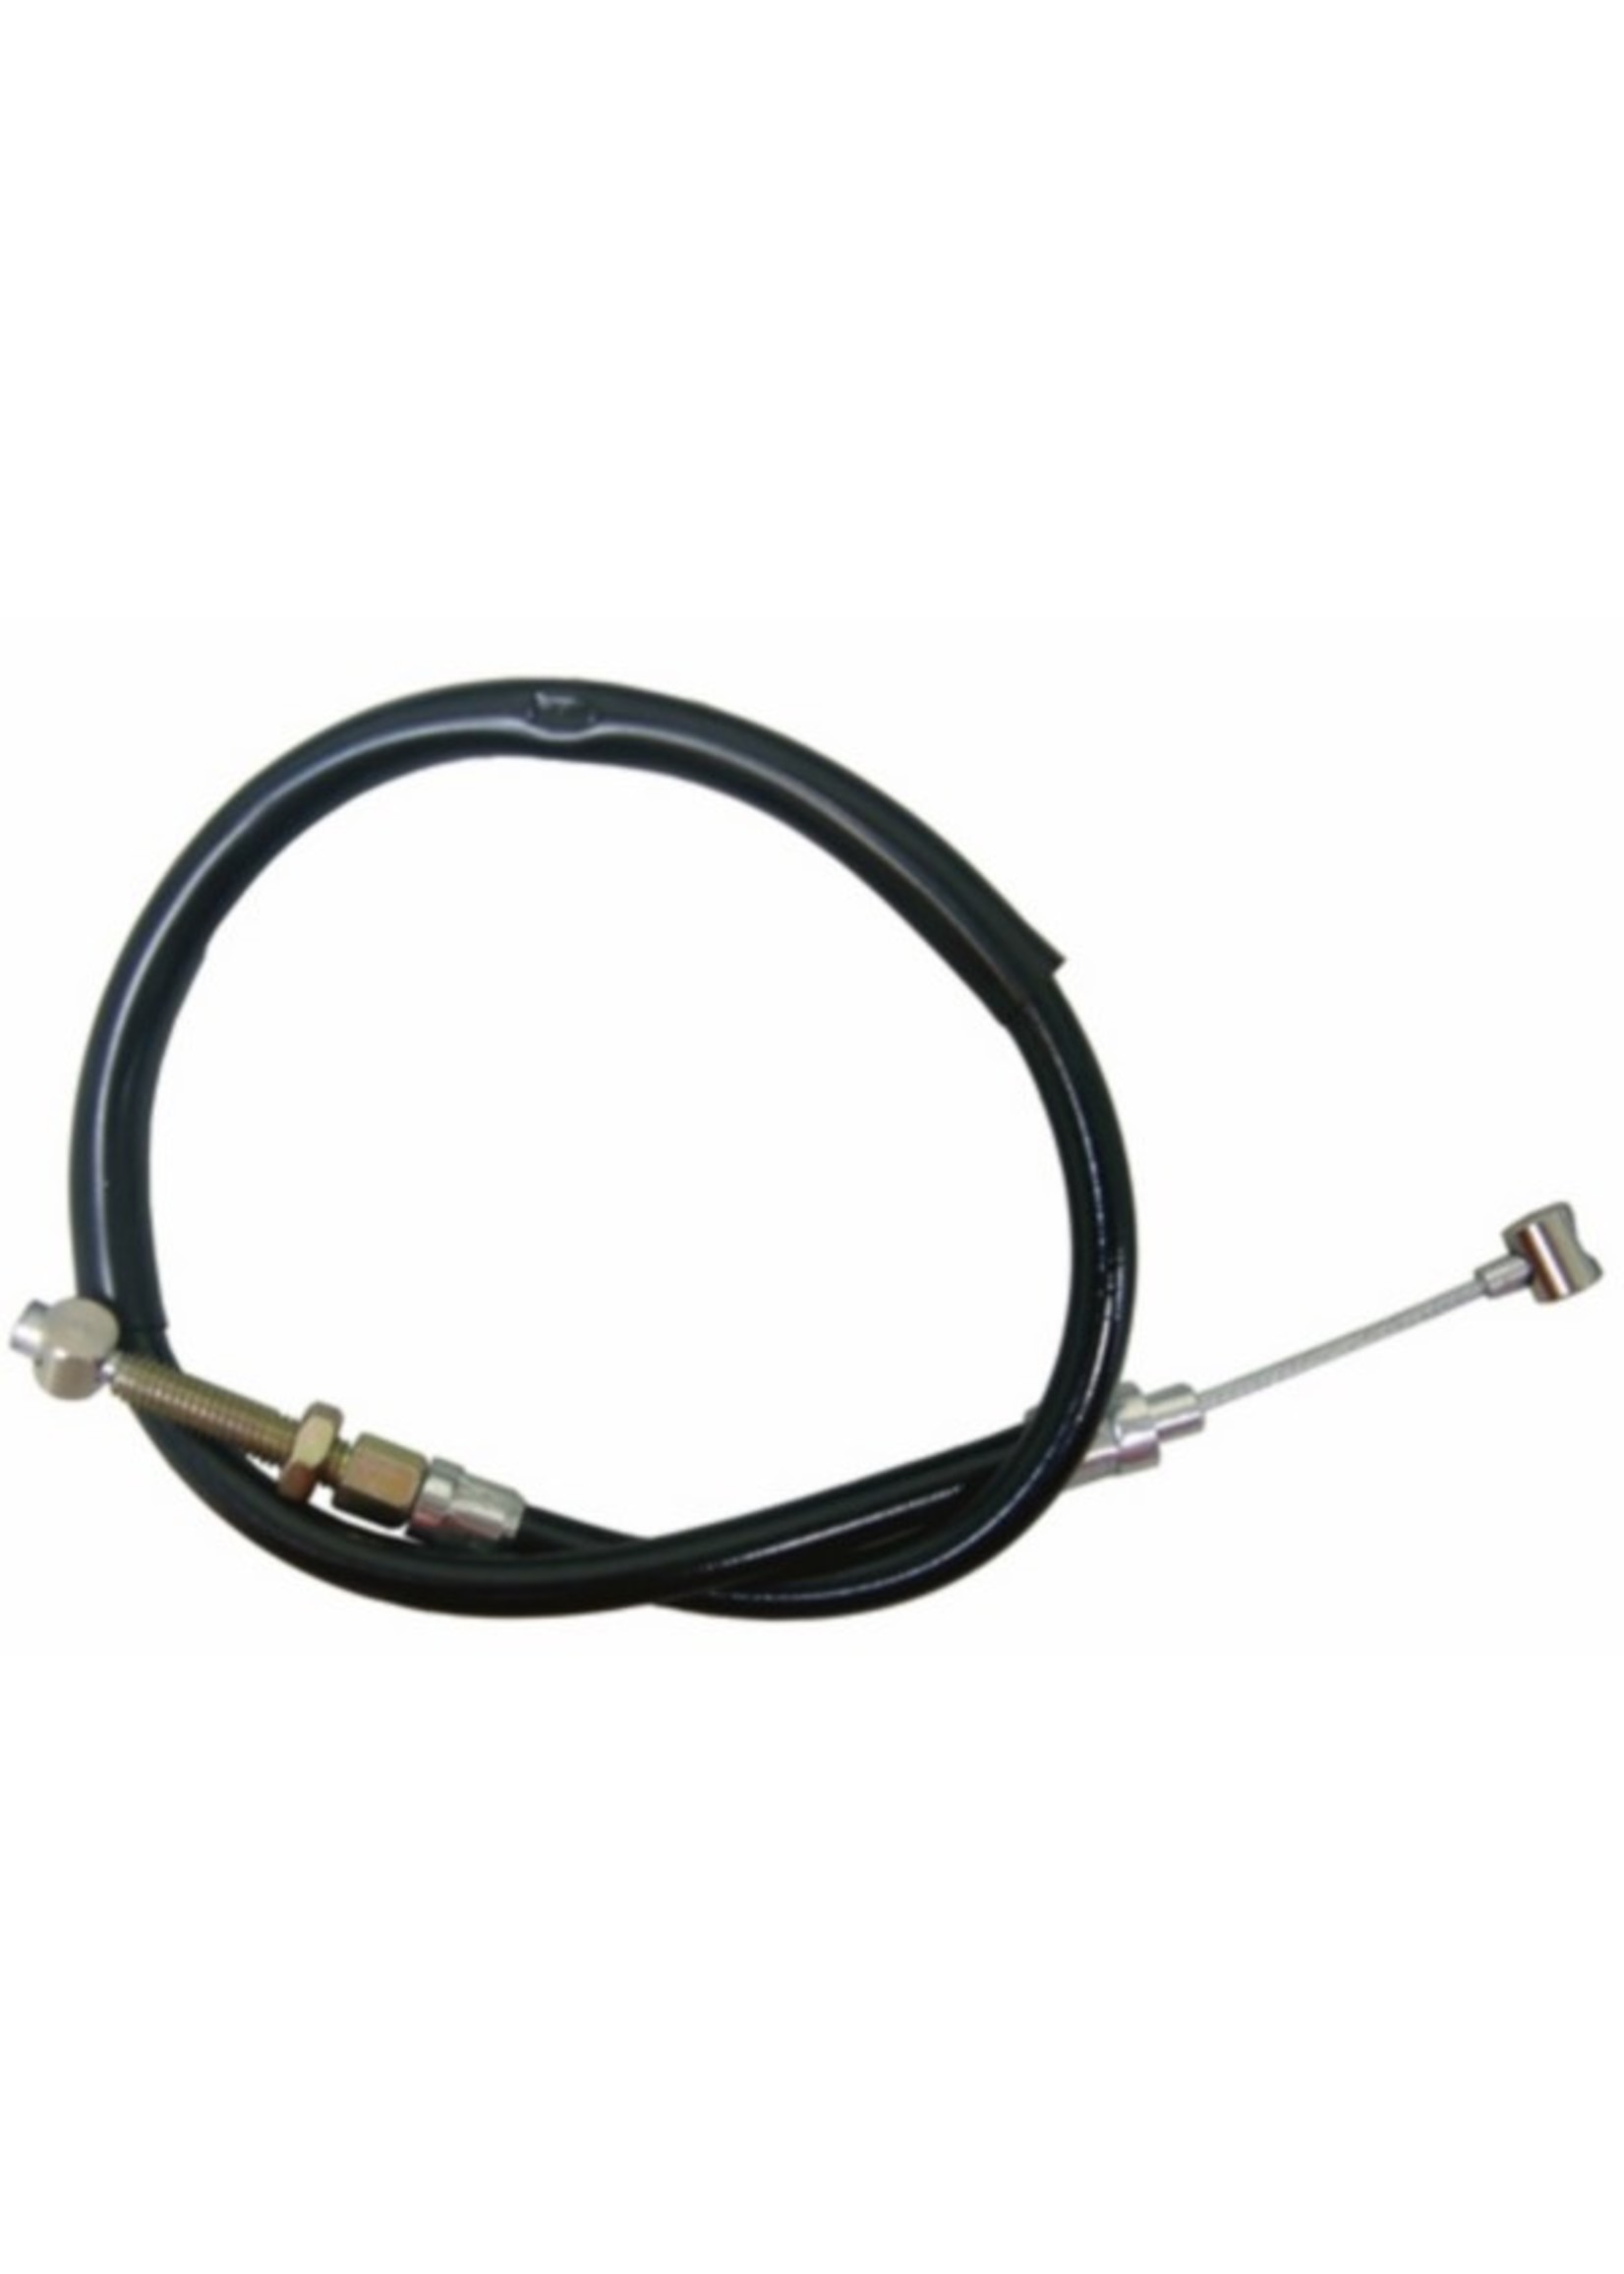 Kreidler kabel achterrem rm/rmc DMP